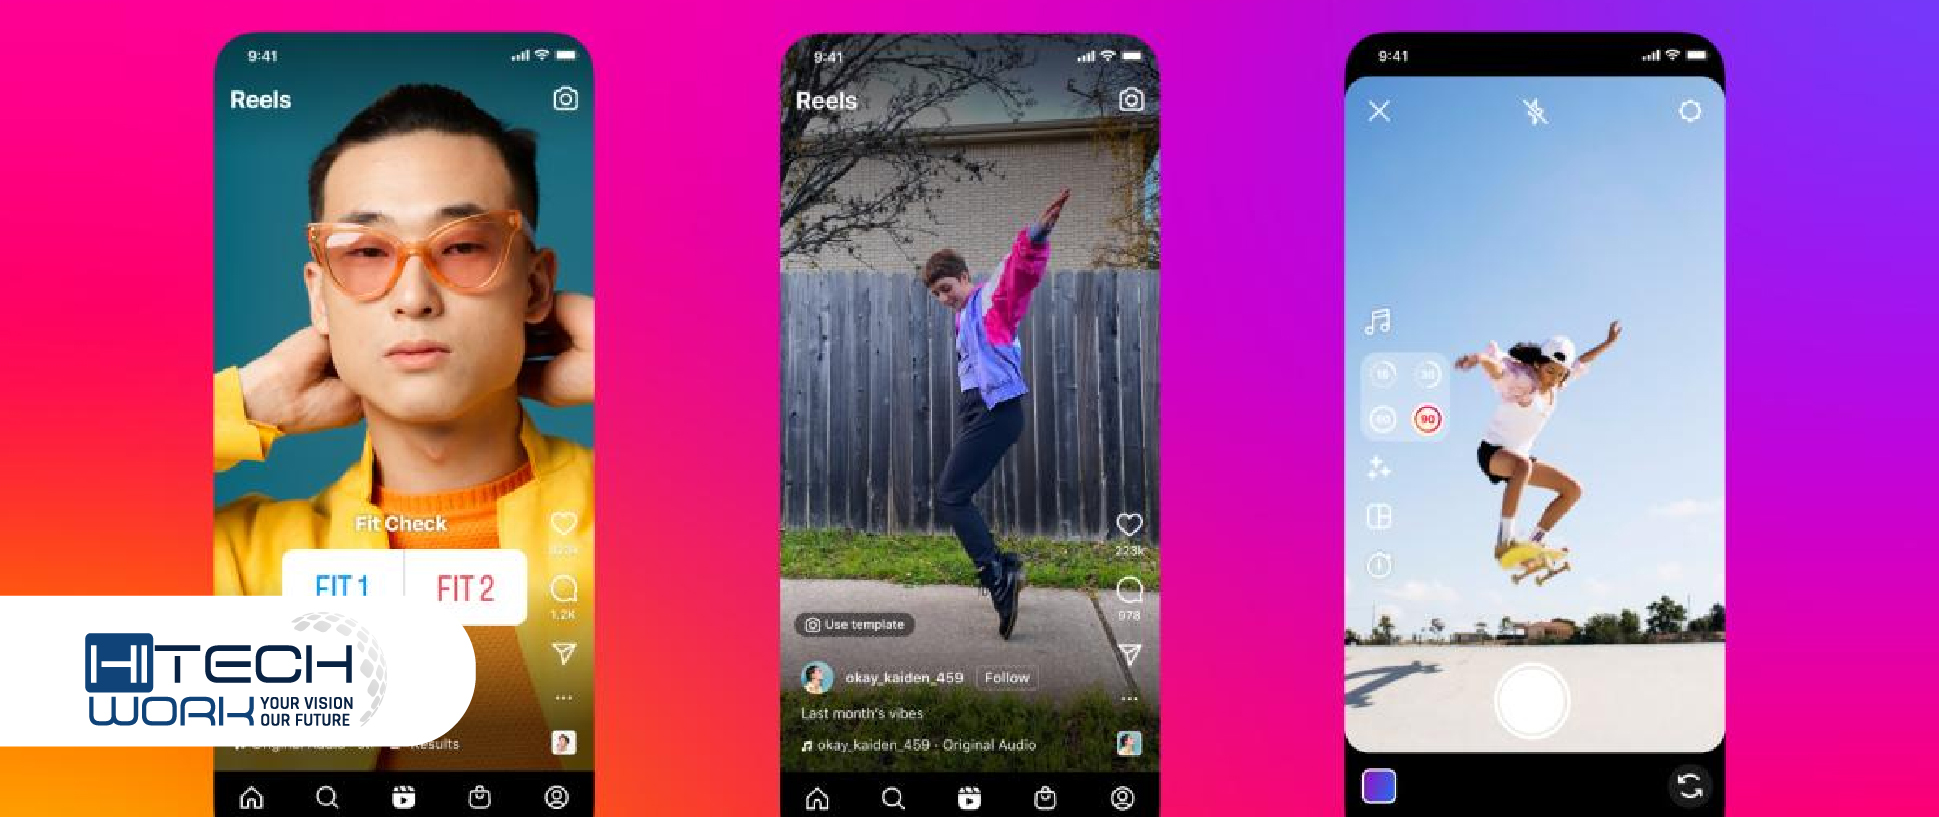 Instagram Released Redesigned Editor for Reels